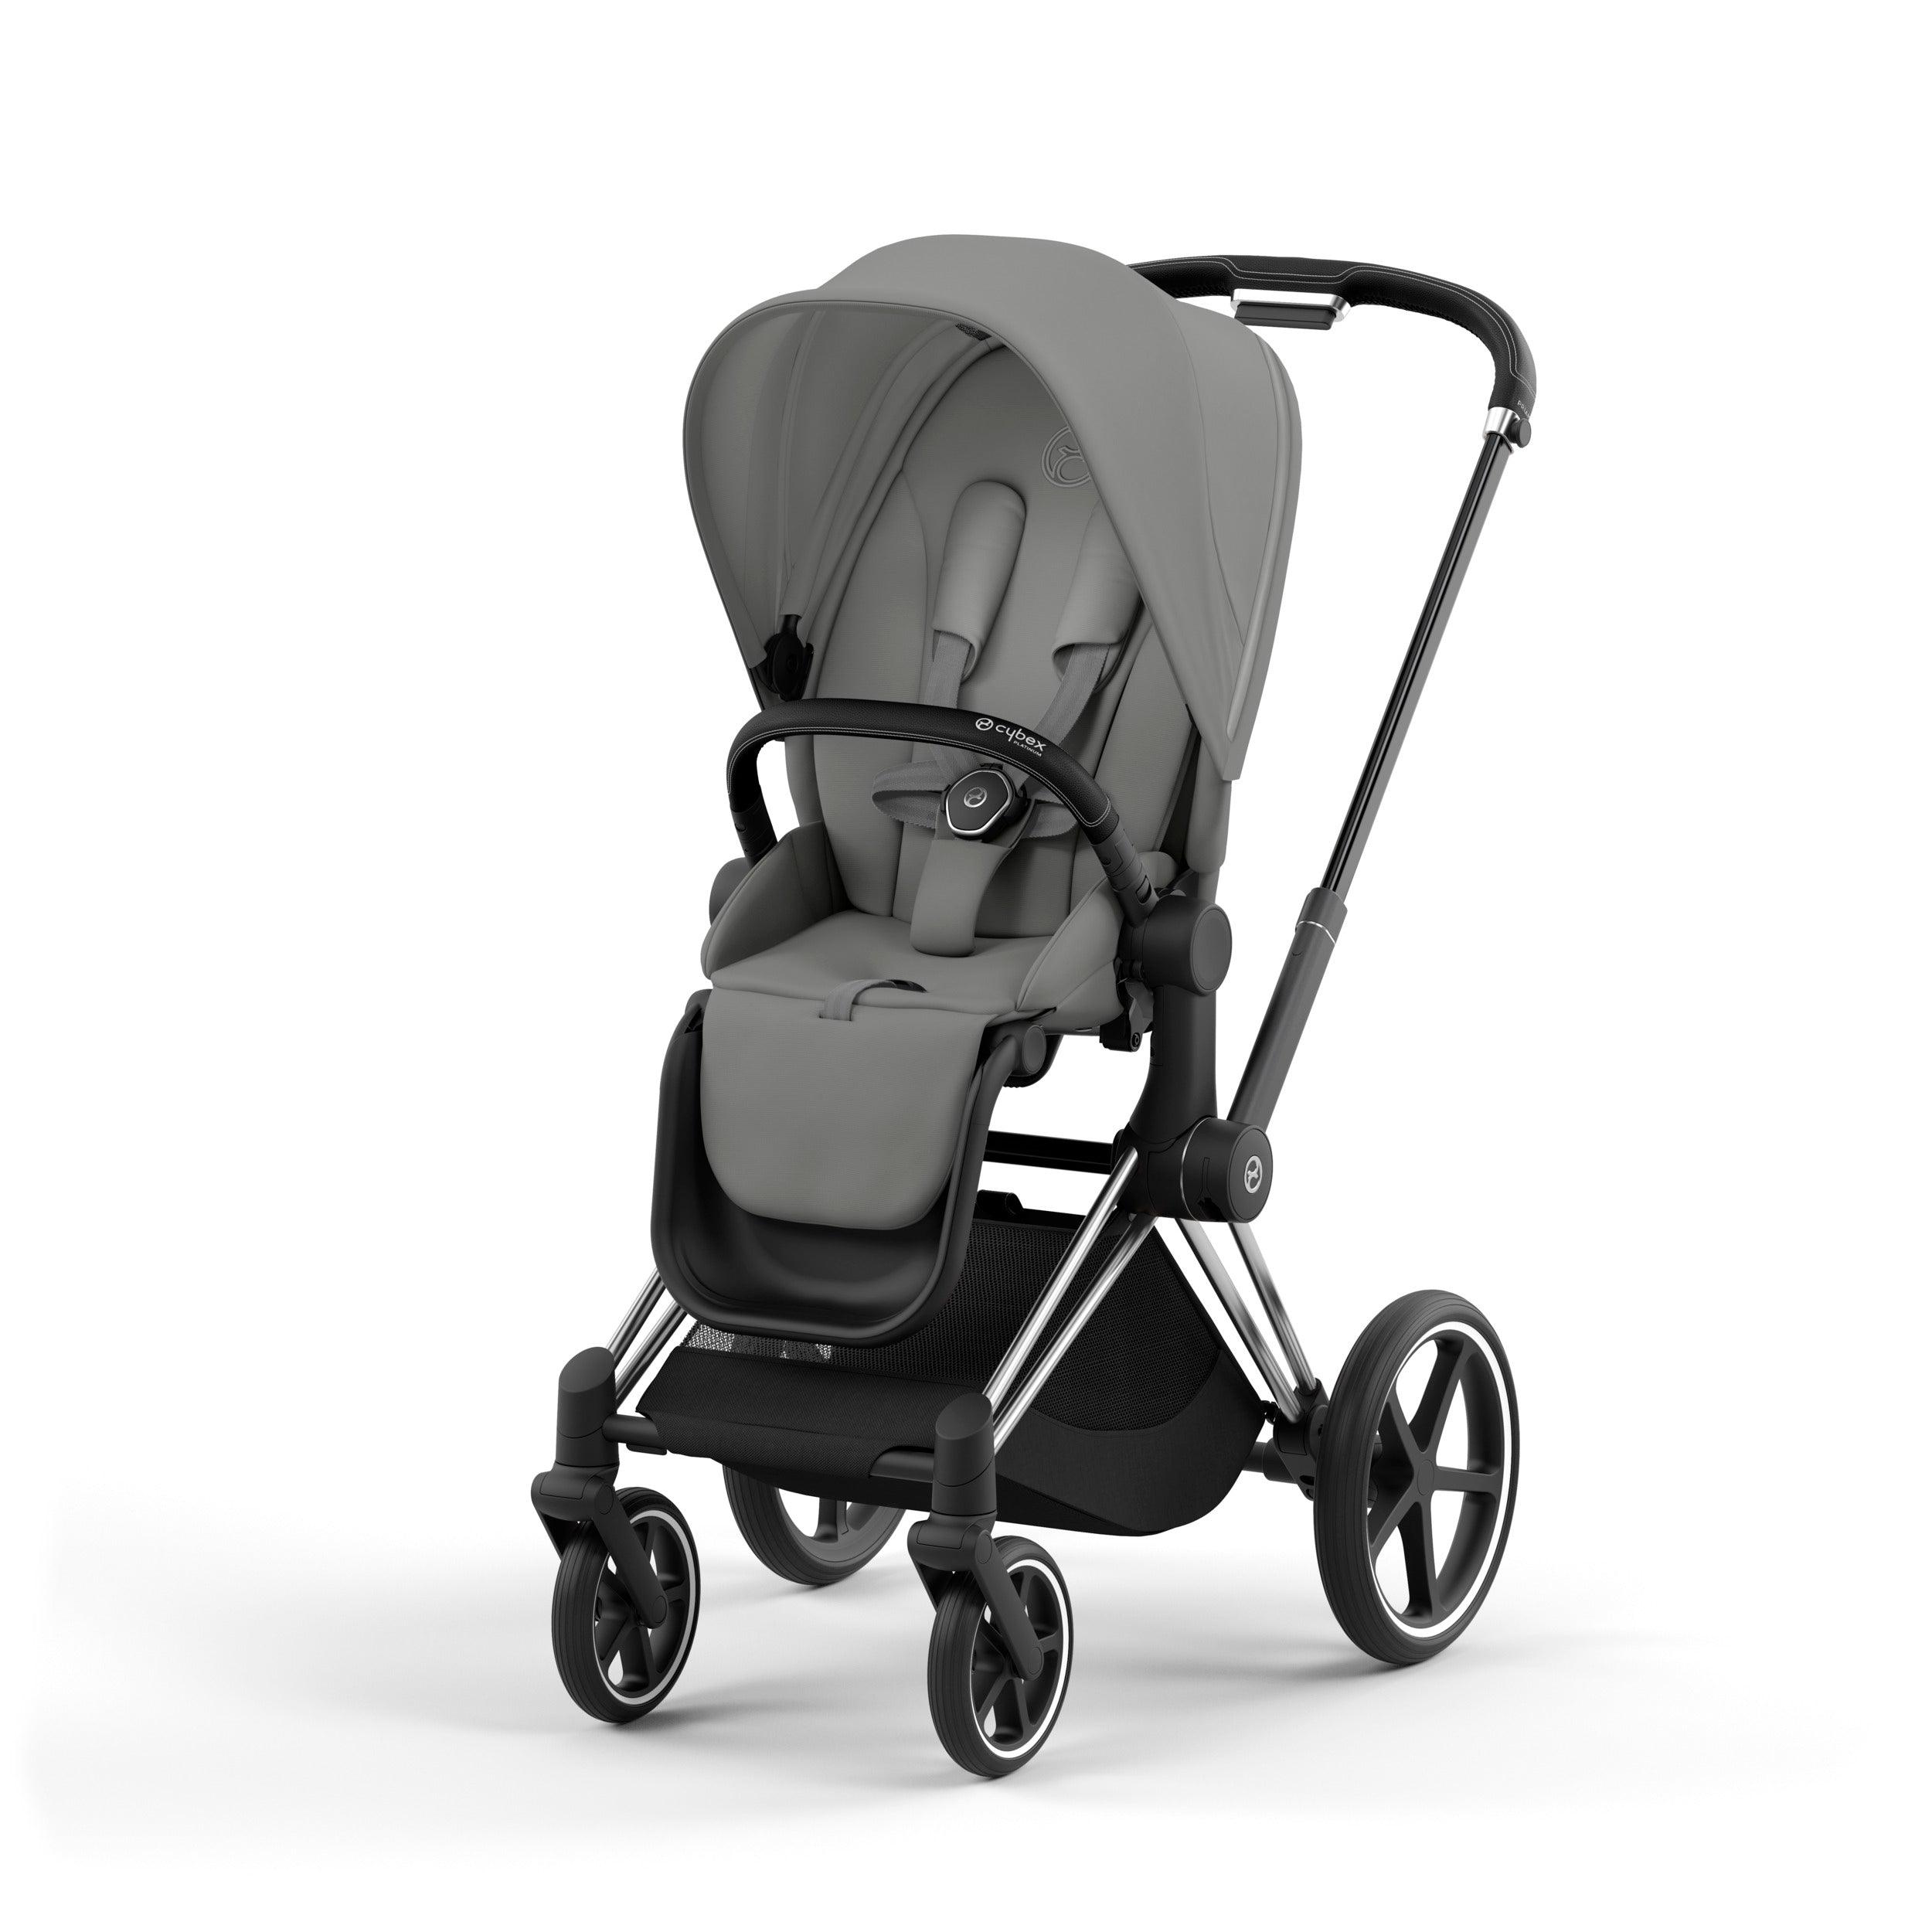 CYBEX Priam Baby Stroller in Mirage Grey & Chrome Black frame